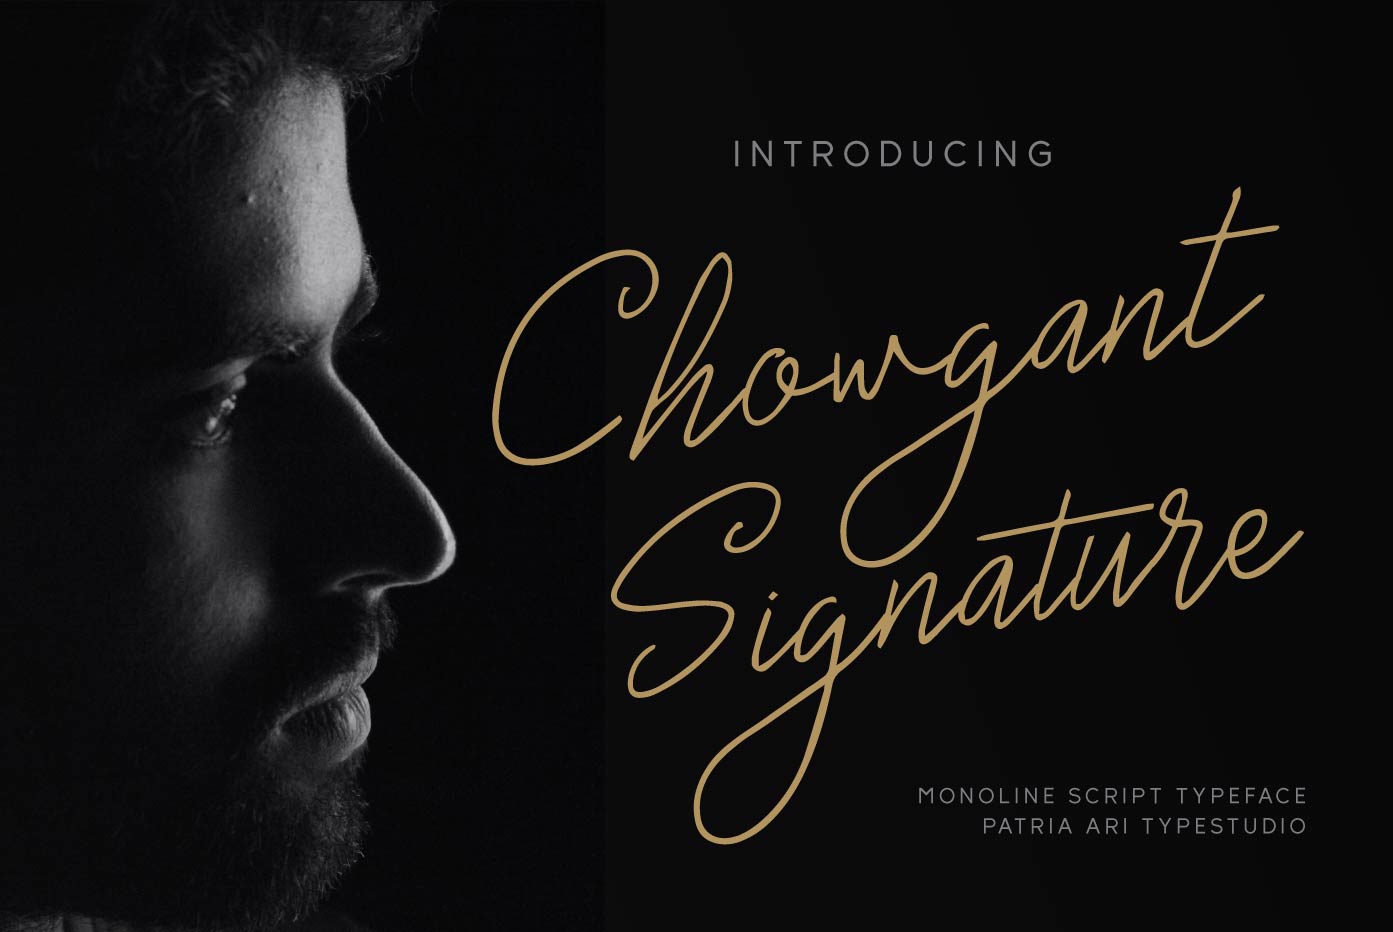 Chowgant Signature